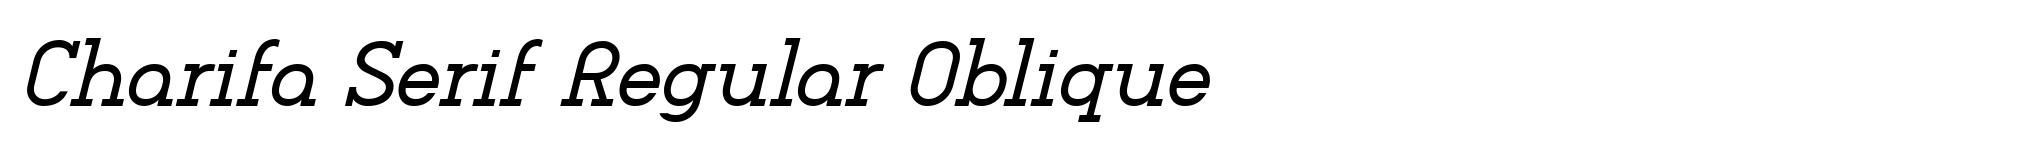 Charifa Serif Regular Oblique image